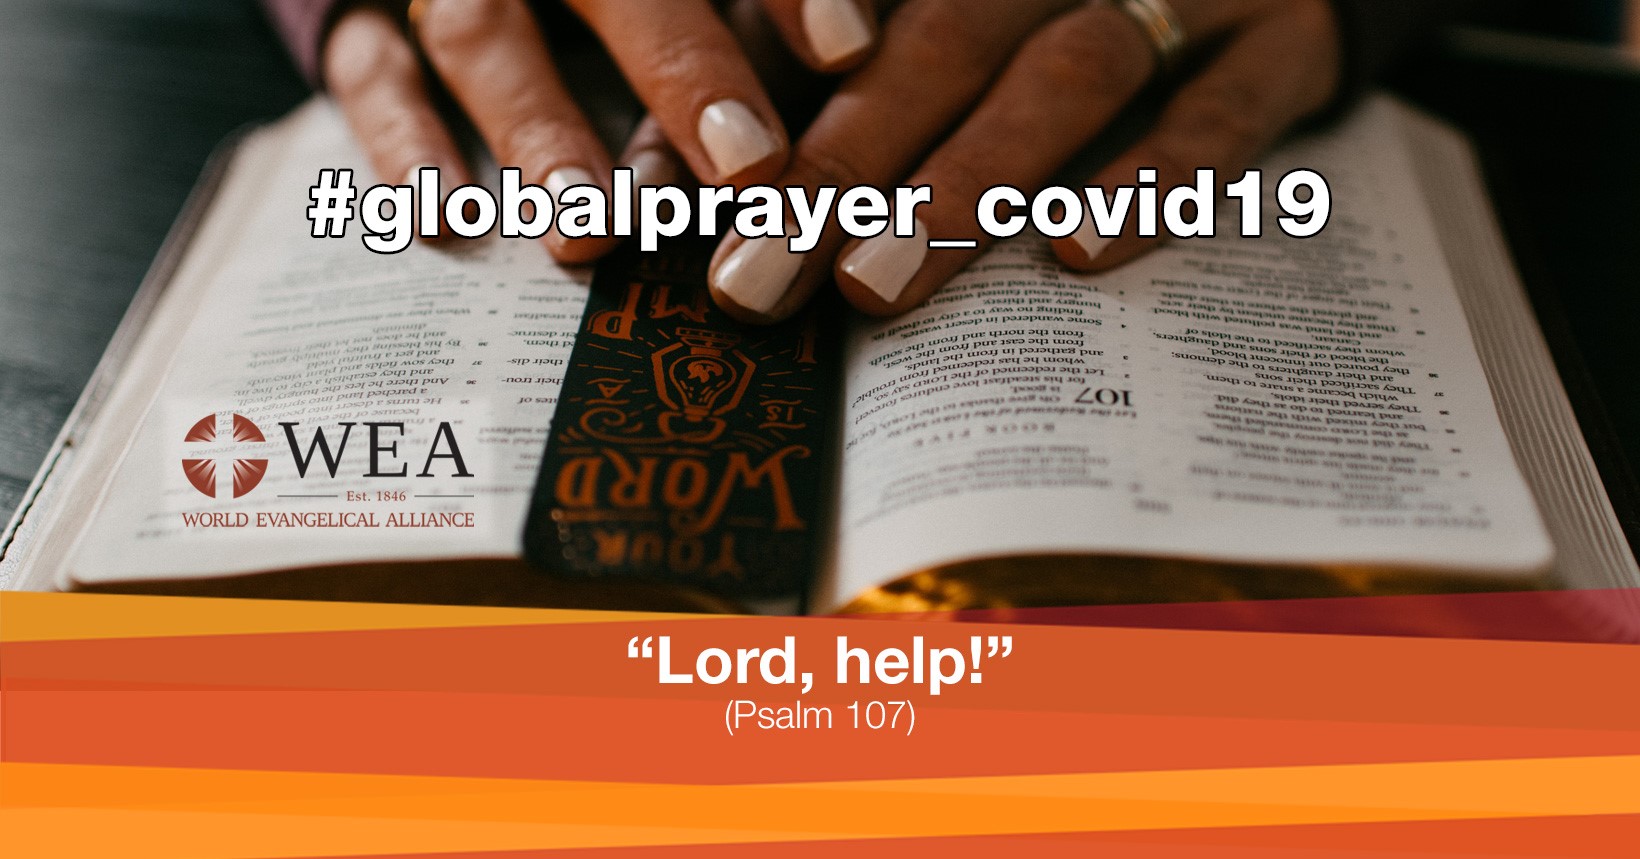 Global Day of Prayer and Fasting amid the ongoing COVID-19 pandemic - This day of PRAYER and FASTING is set for Sunday, March 29, 2020. globalprayer_covid19 #GlobalDayofPrayerandFasting #COVID19 #Coronavirus